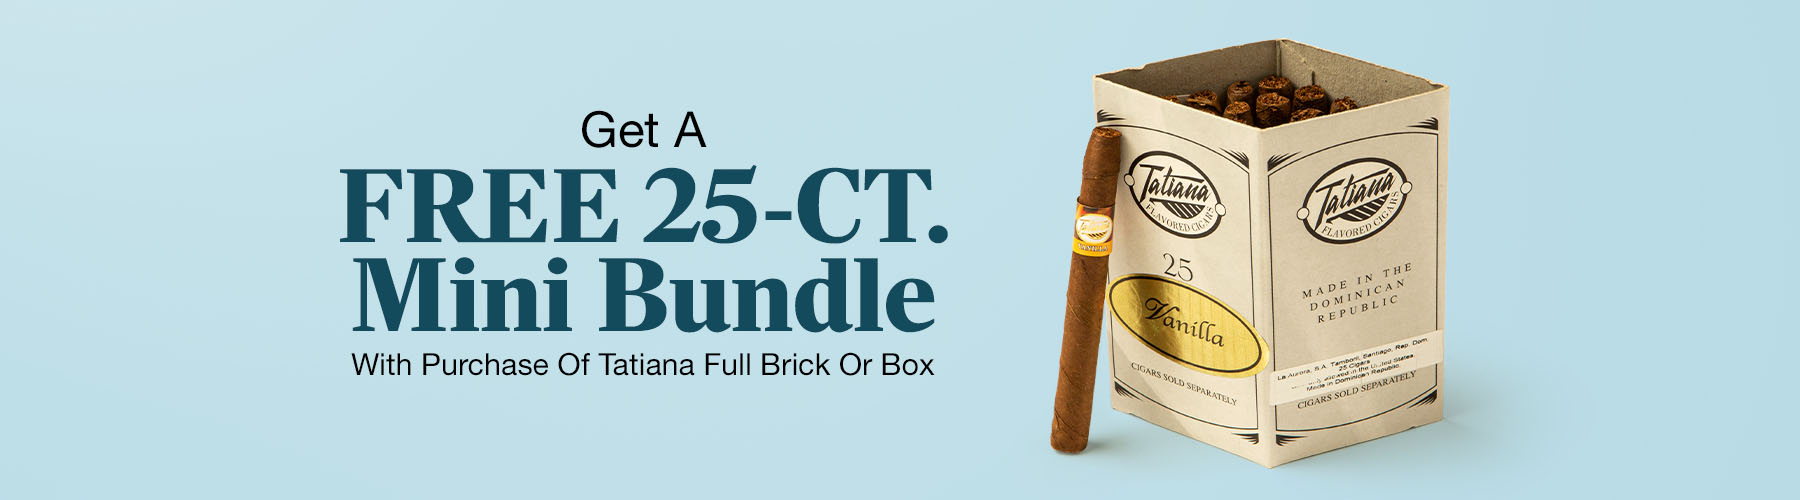 25-Count bundle free with Tatiana boxes or bricks!